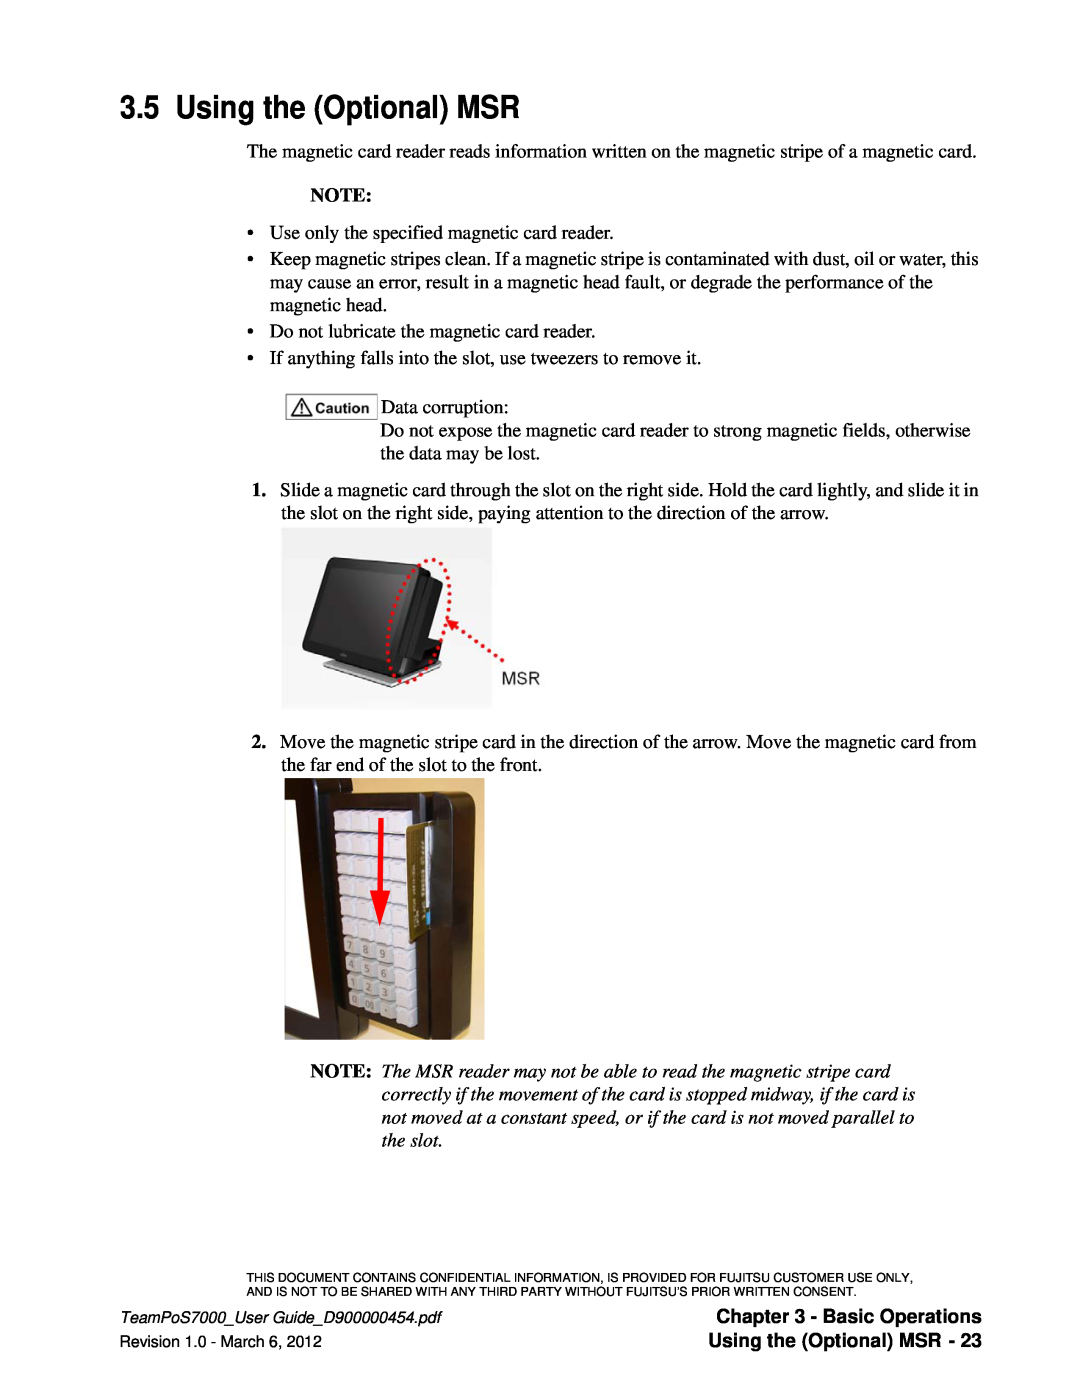 Fujitsu 7000 manual Using the Optional MSR, Basic Operations 